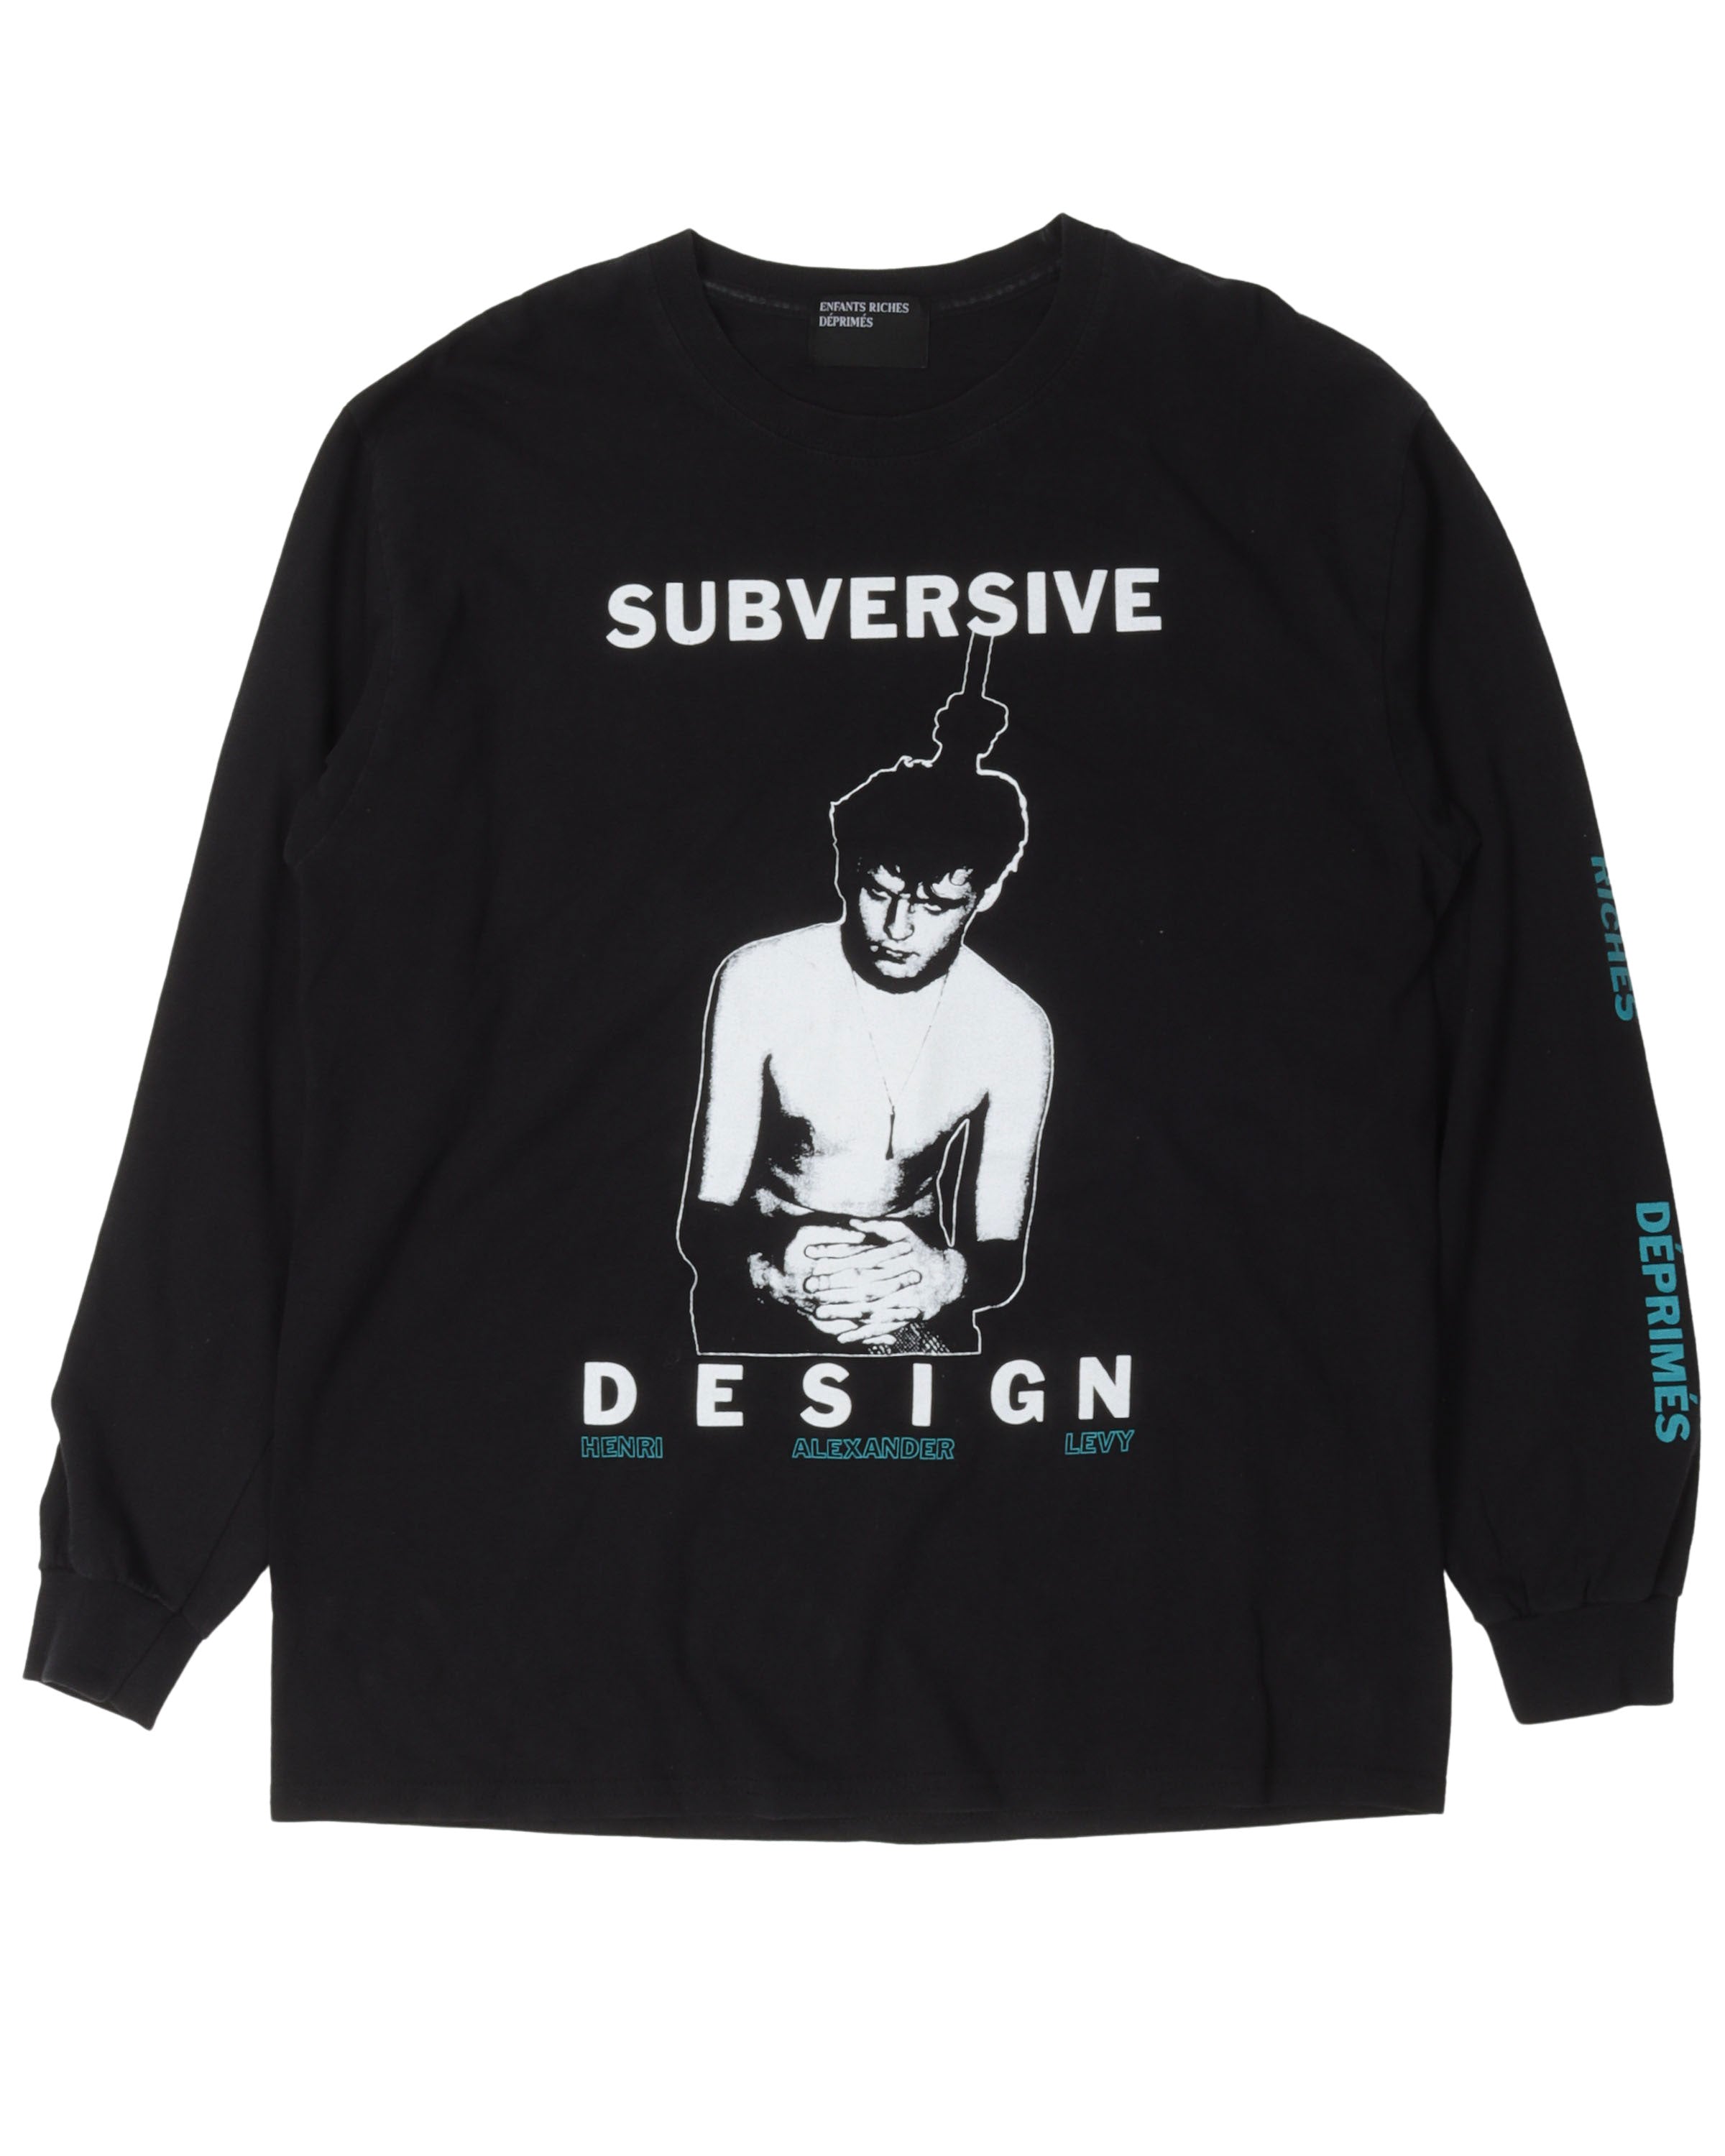 Subversive Design Long Sleeve T-Shirt